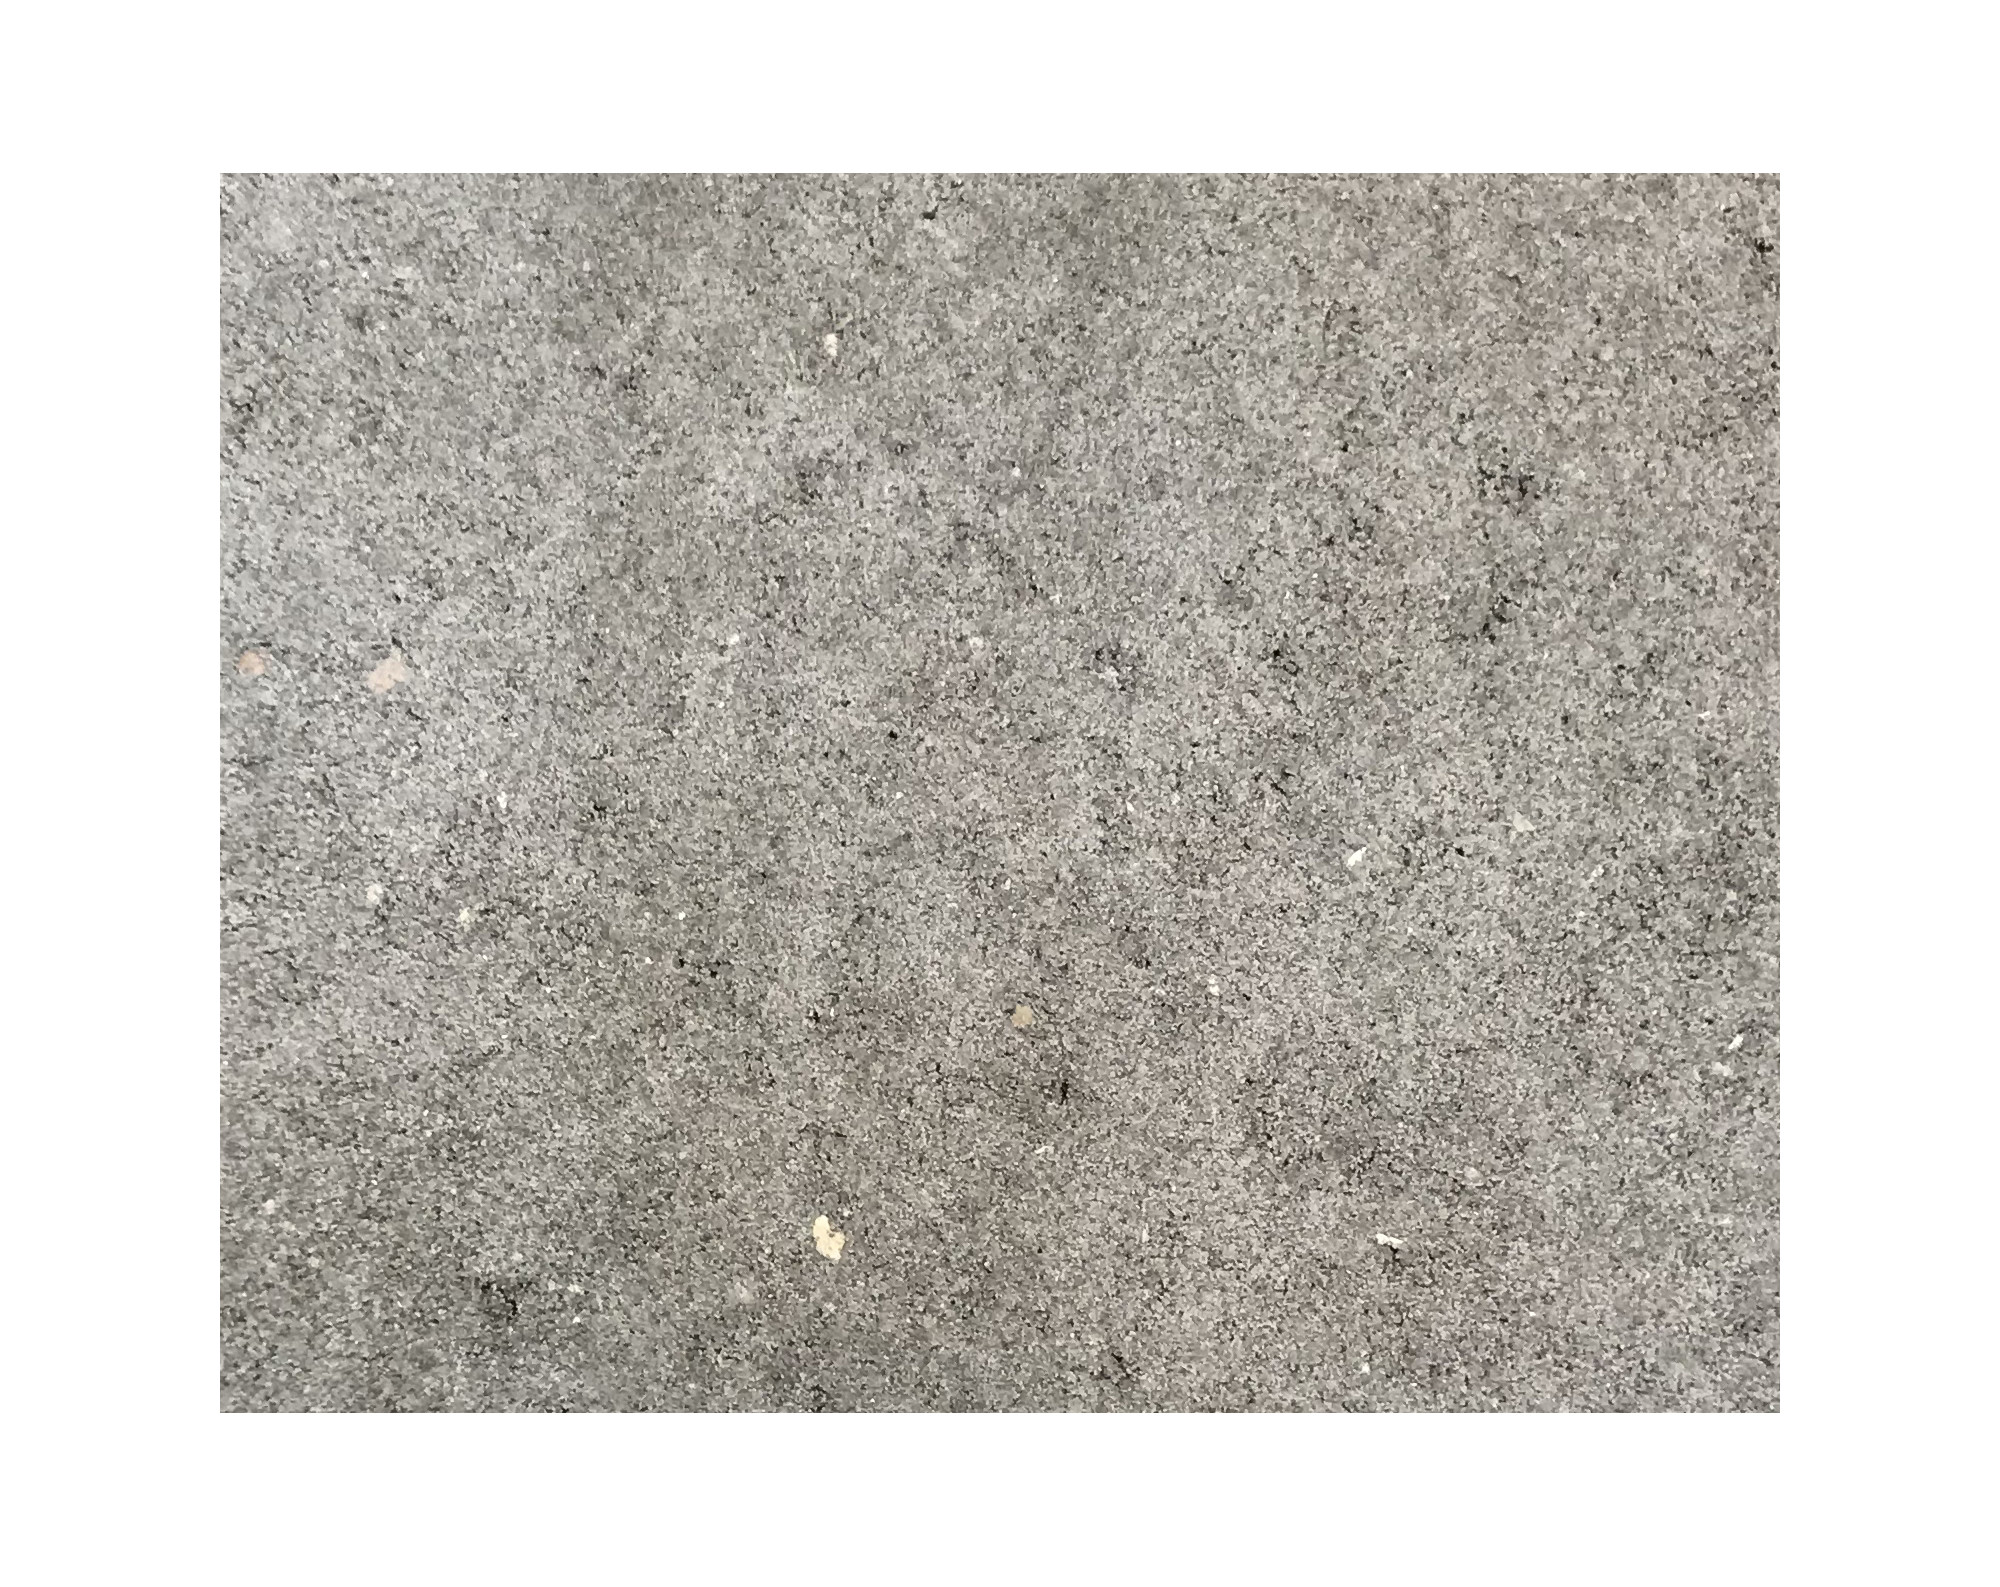 Harmo roc nevadaset, rustica-serie, ovaal d: 3,50mx7,50m, grijs, beton